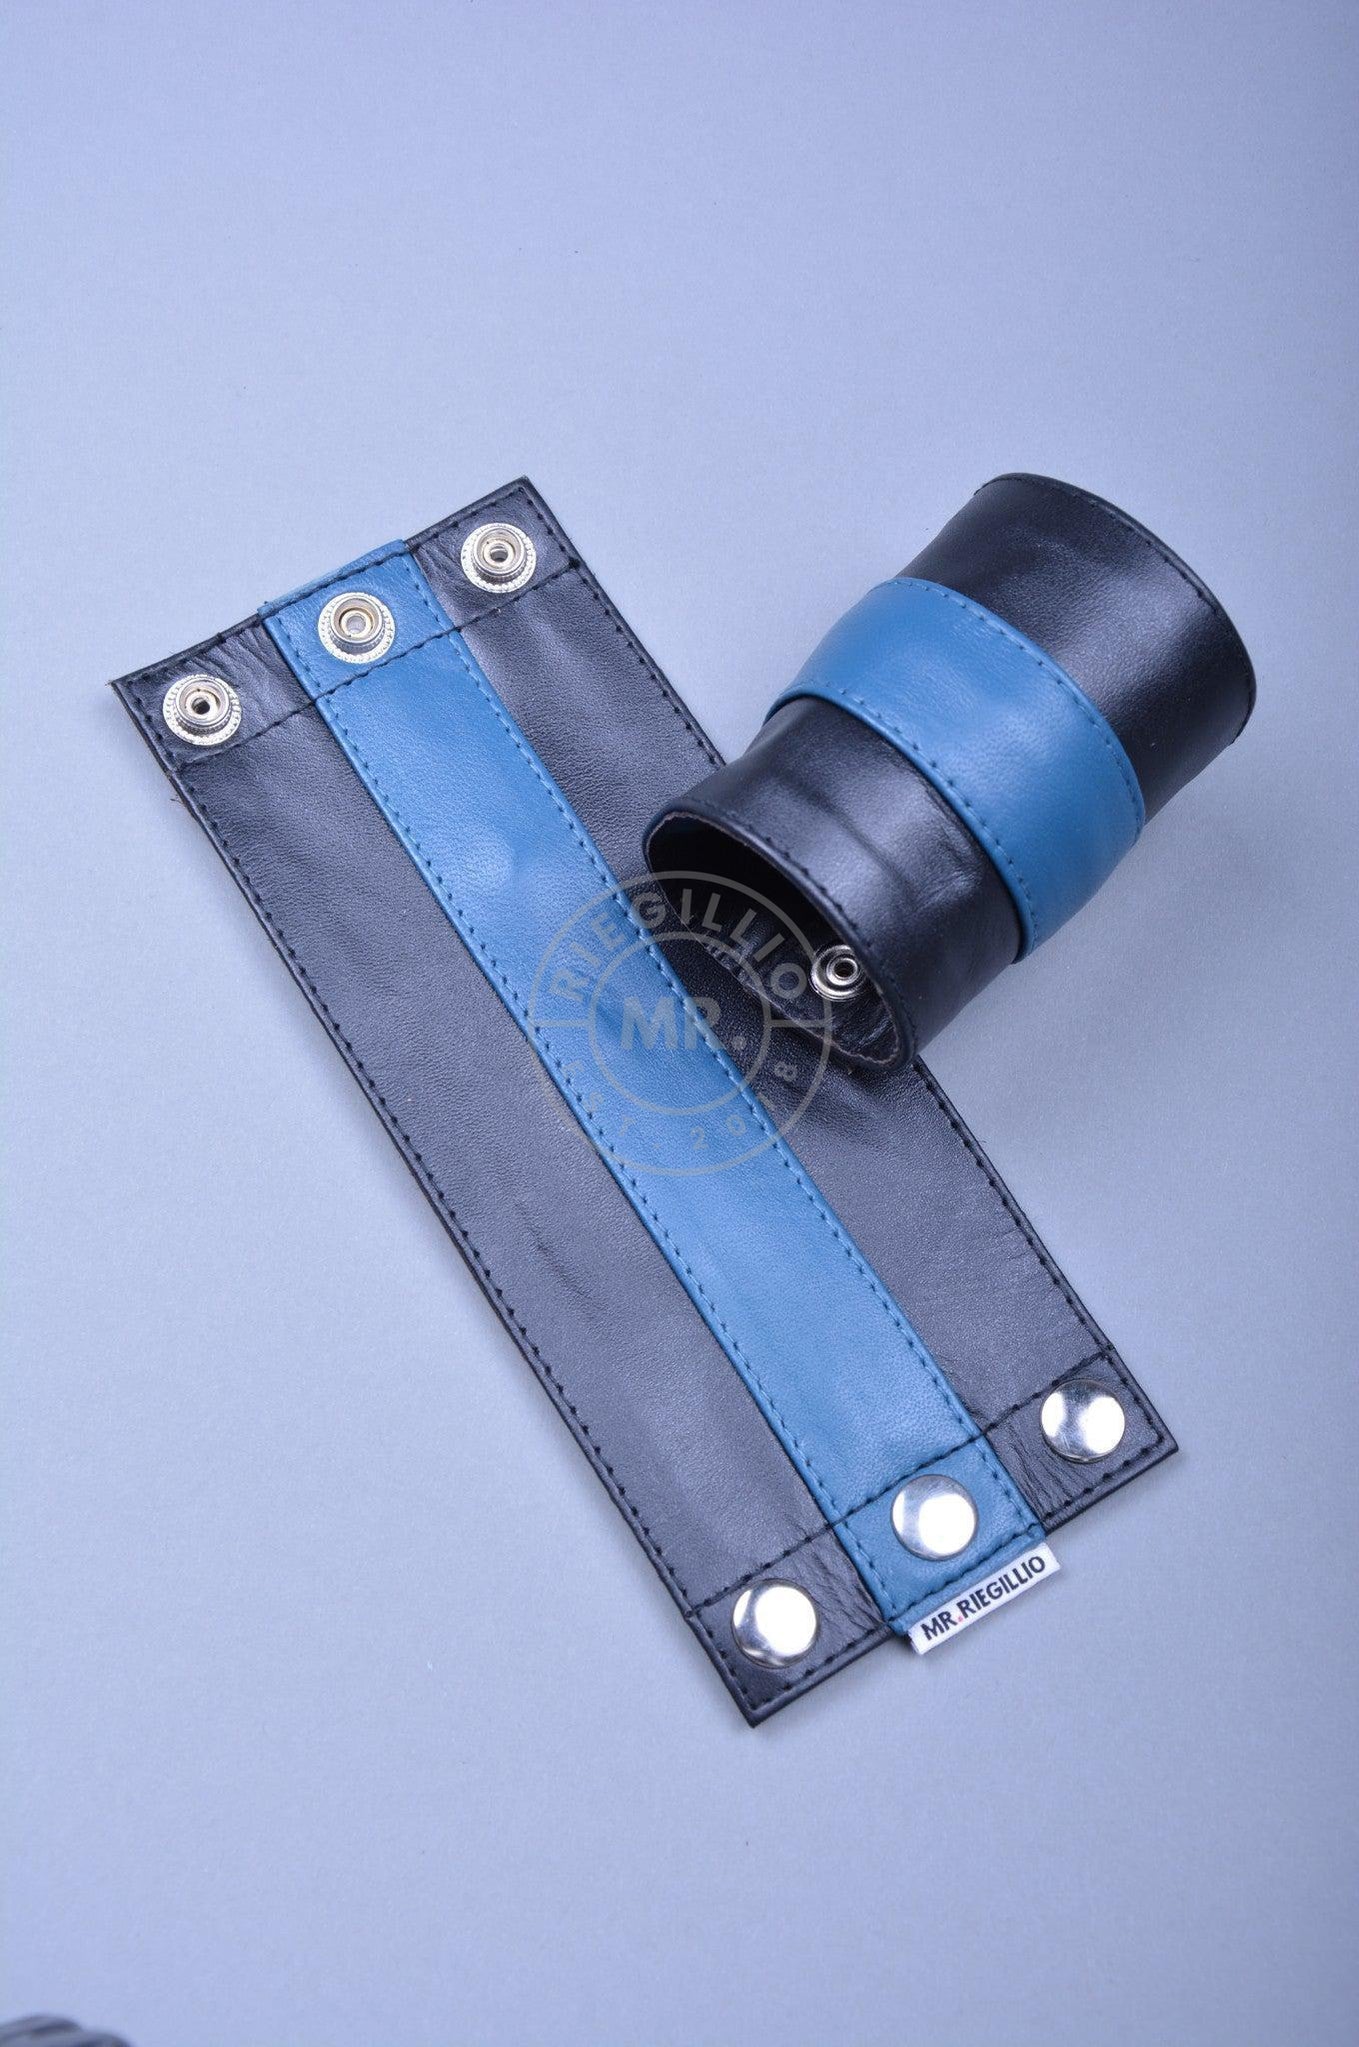 Jeans Blue Wrist Wallet - Single Stripe-at MR. Riegillio